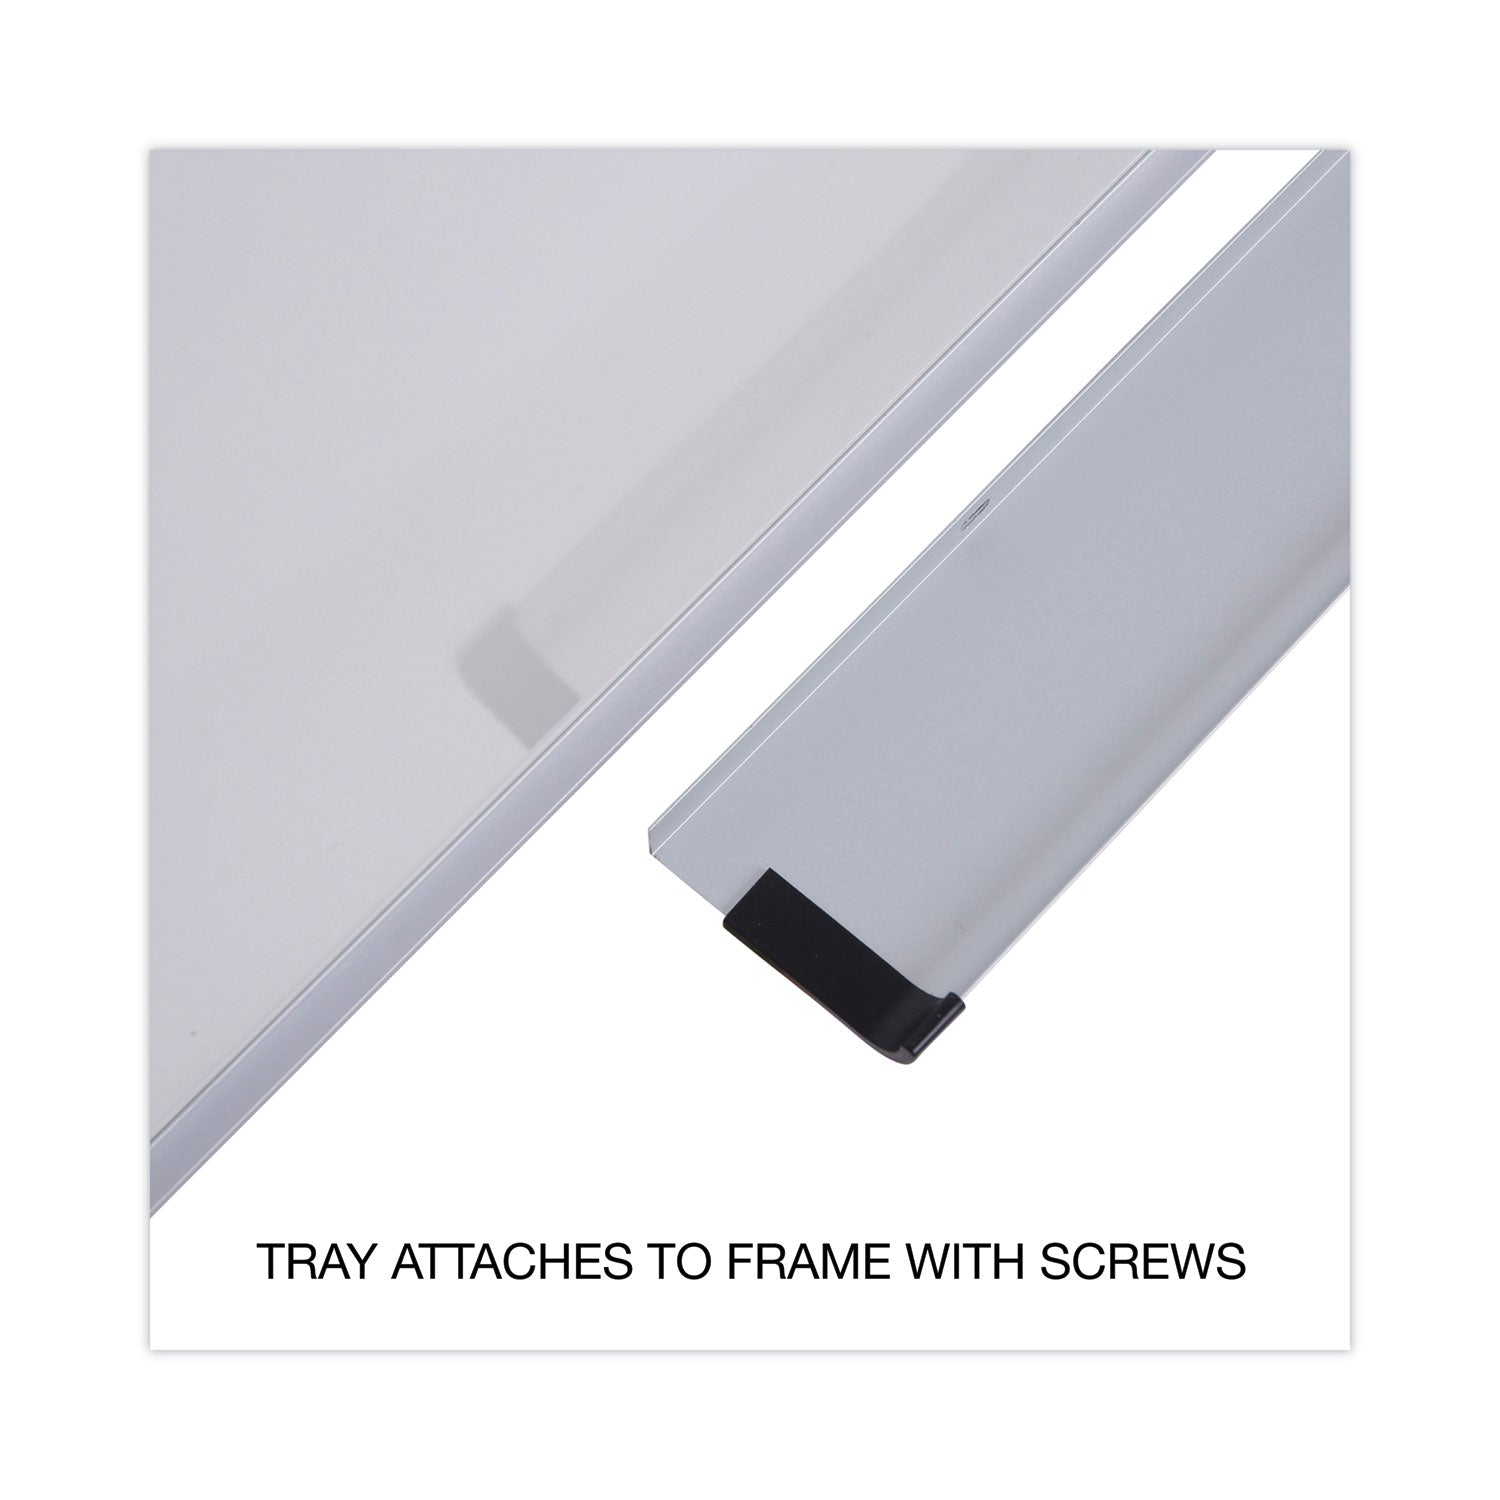 Modern Melamine Dry Erase Board with Aluminum Frame, 36 x 24, White Surface - 